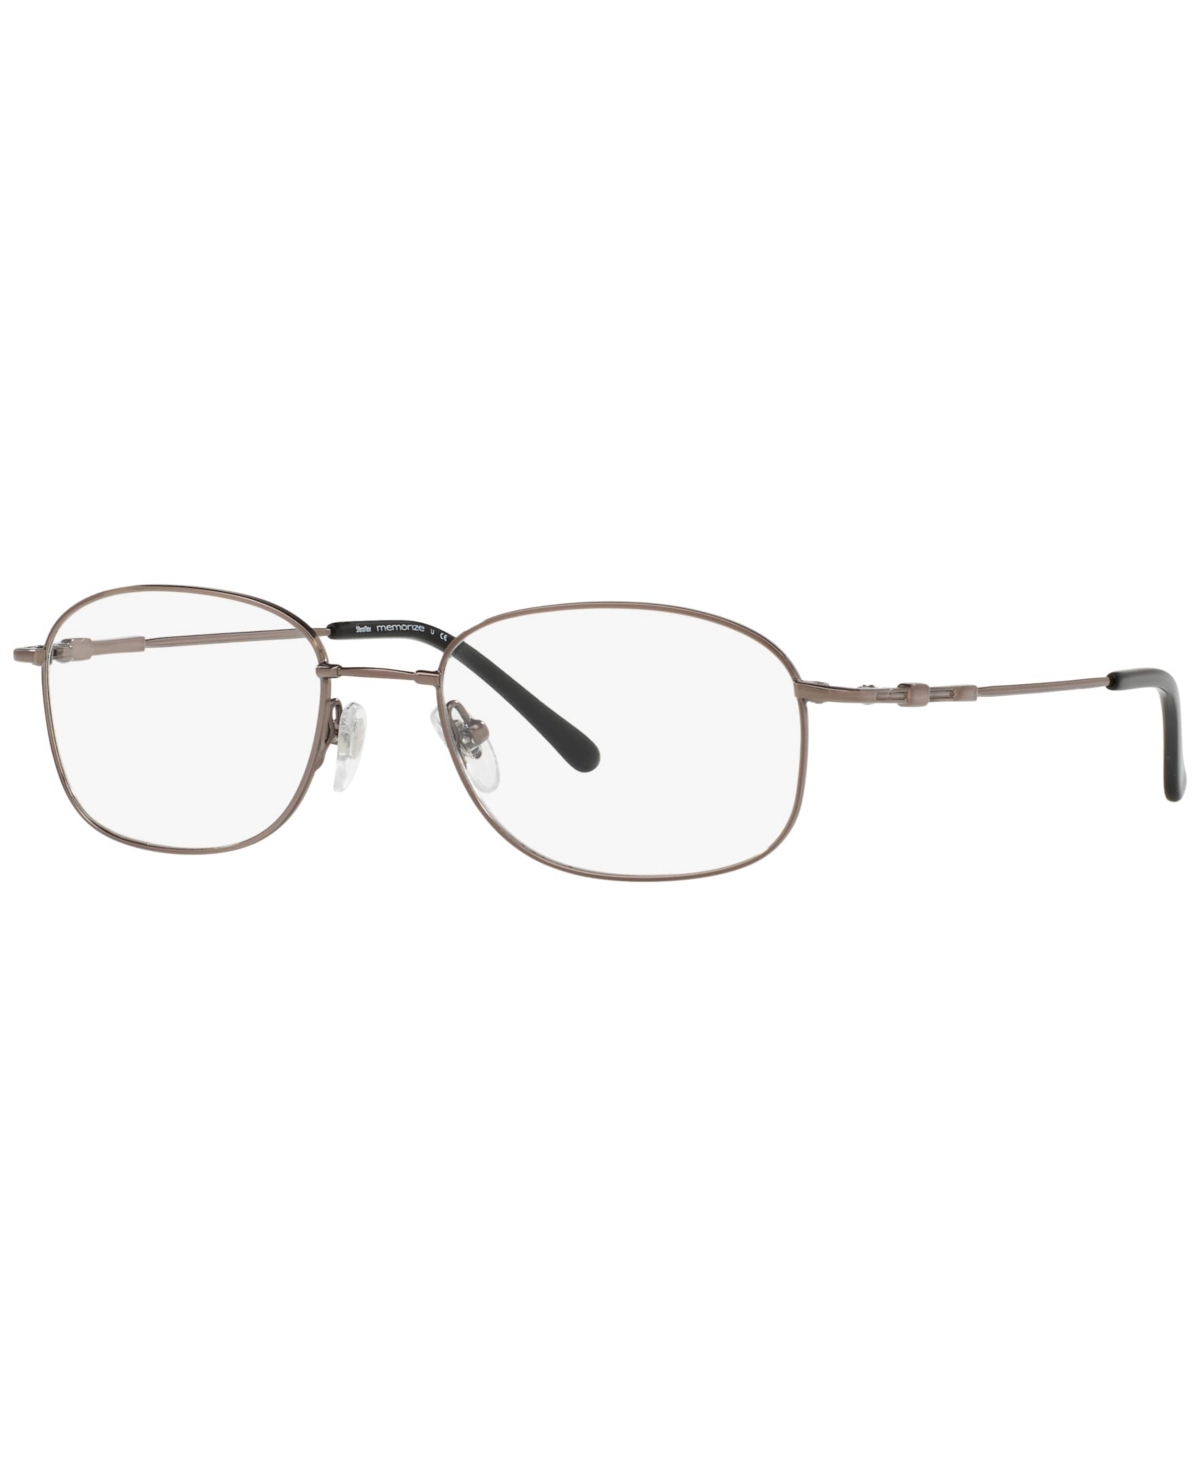 SF9002 Men's Oval Eyeglasses - Shiny Gunmetal